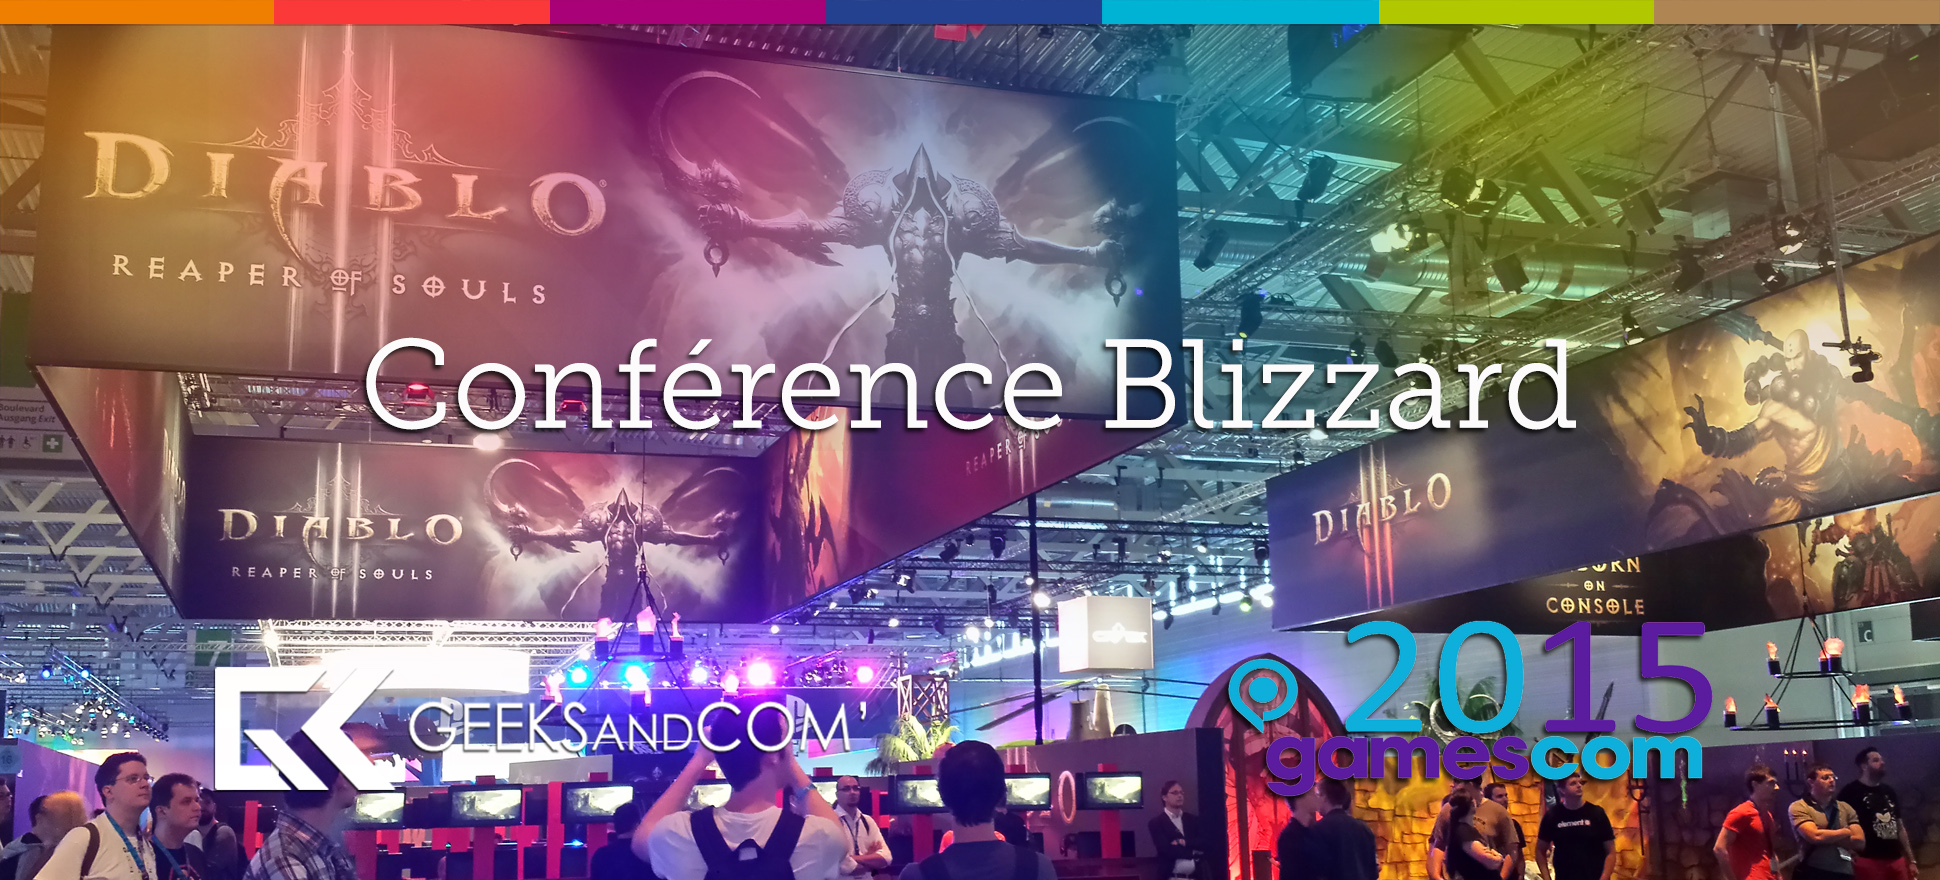 Conférence Blizzard - Gamescom 2015